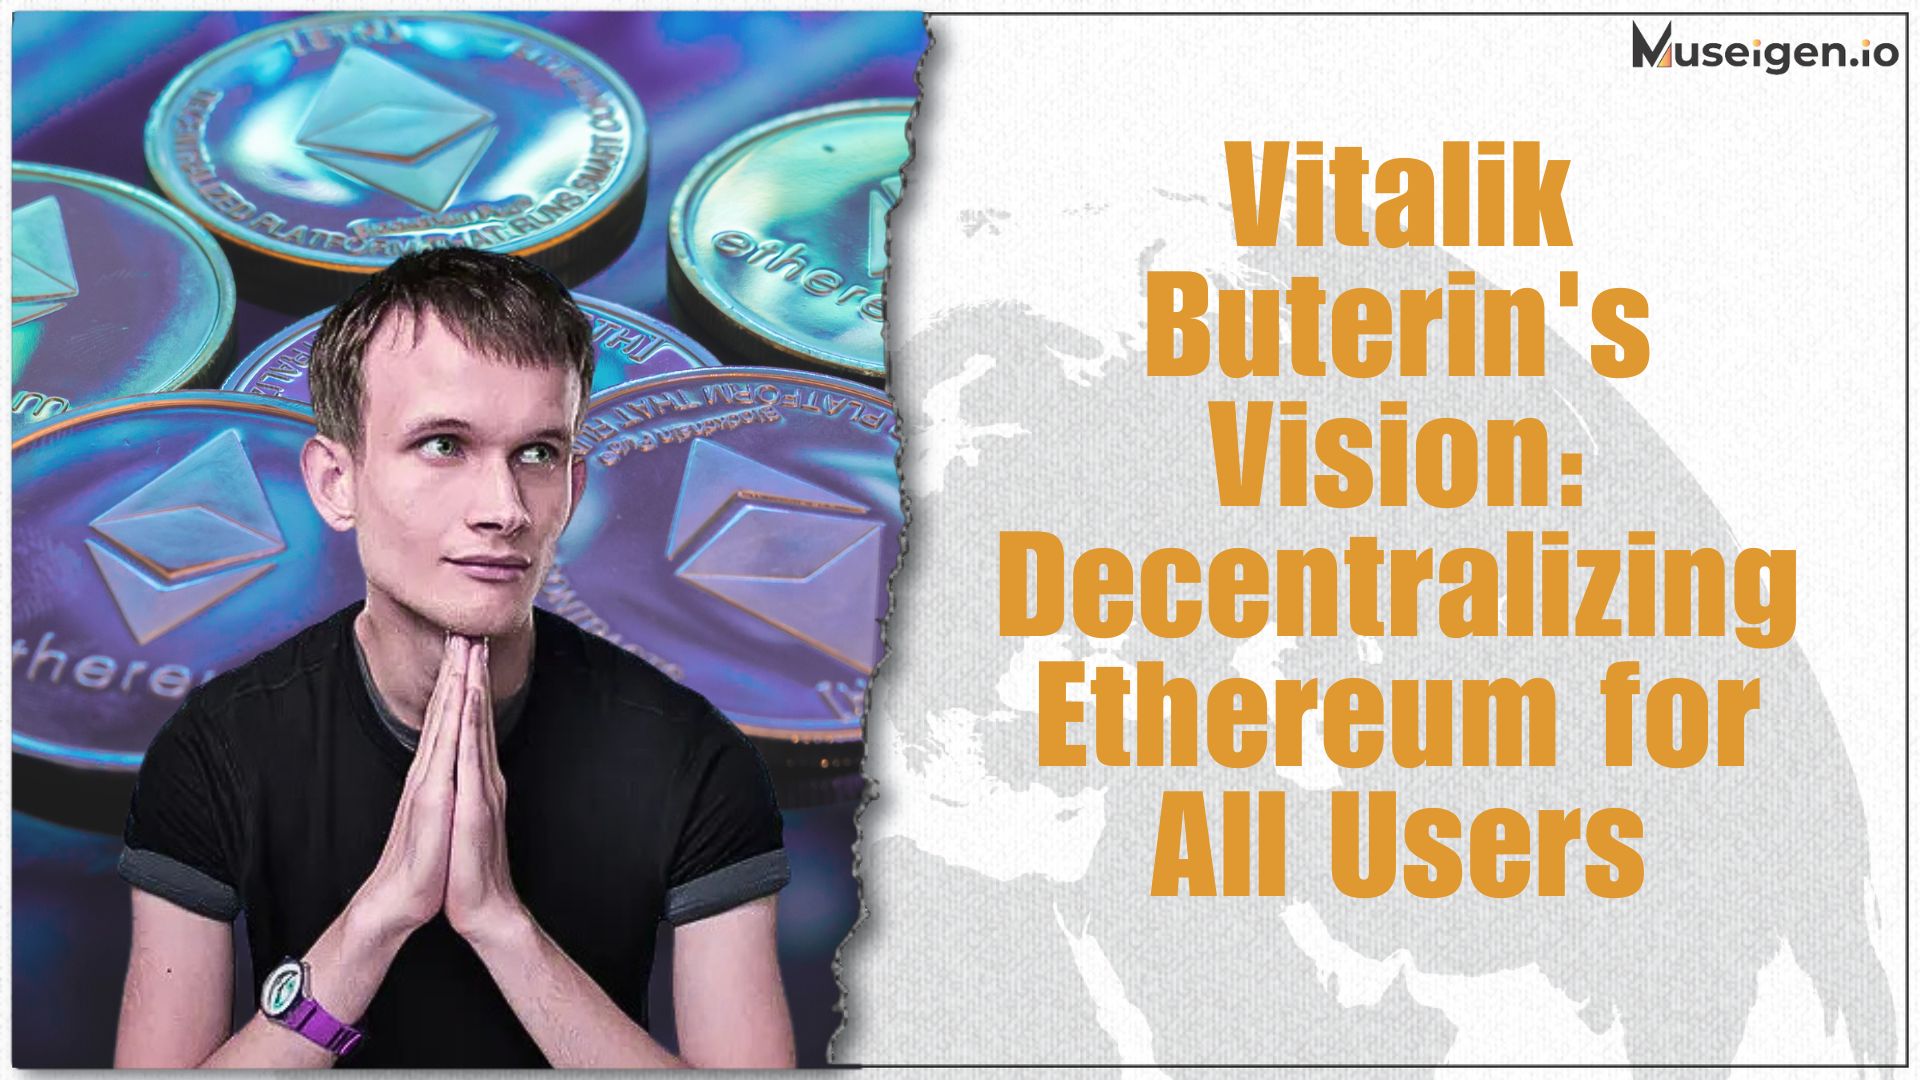 Vitalik Buterin presenting Ethereum's future vision